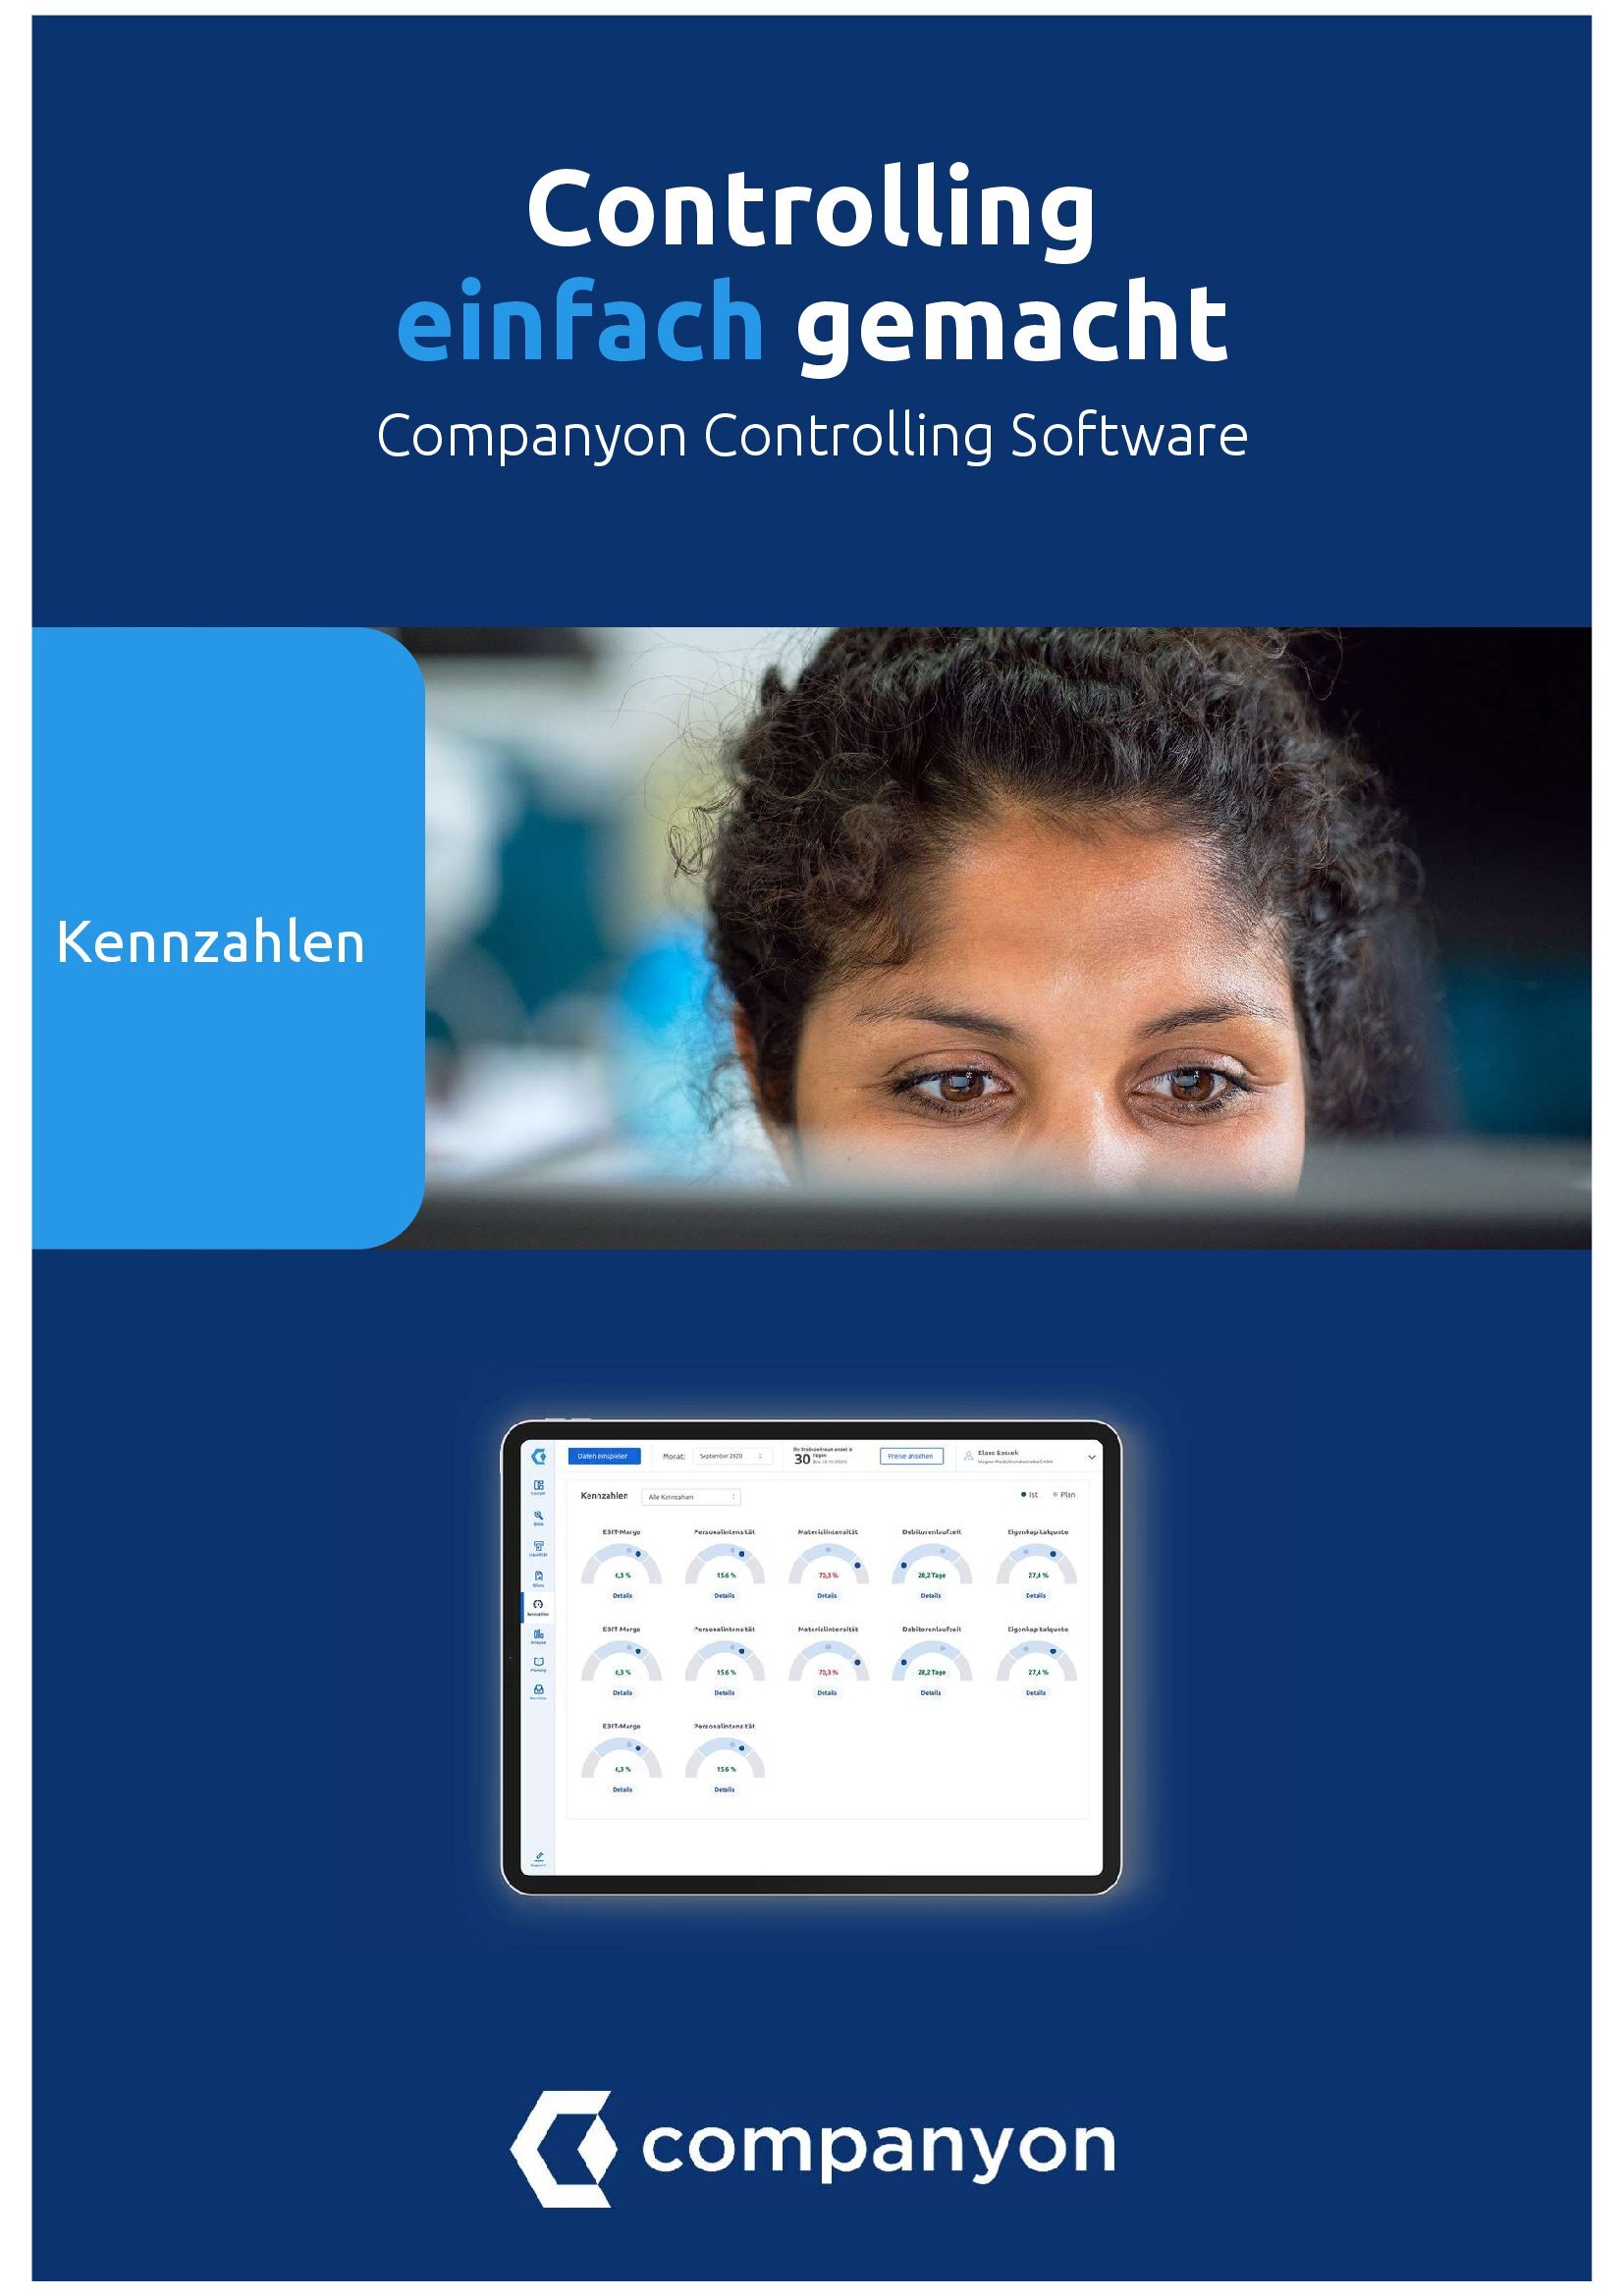 Companyon Controlling Software | Broschüre Kennzahlen KPI